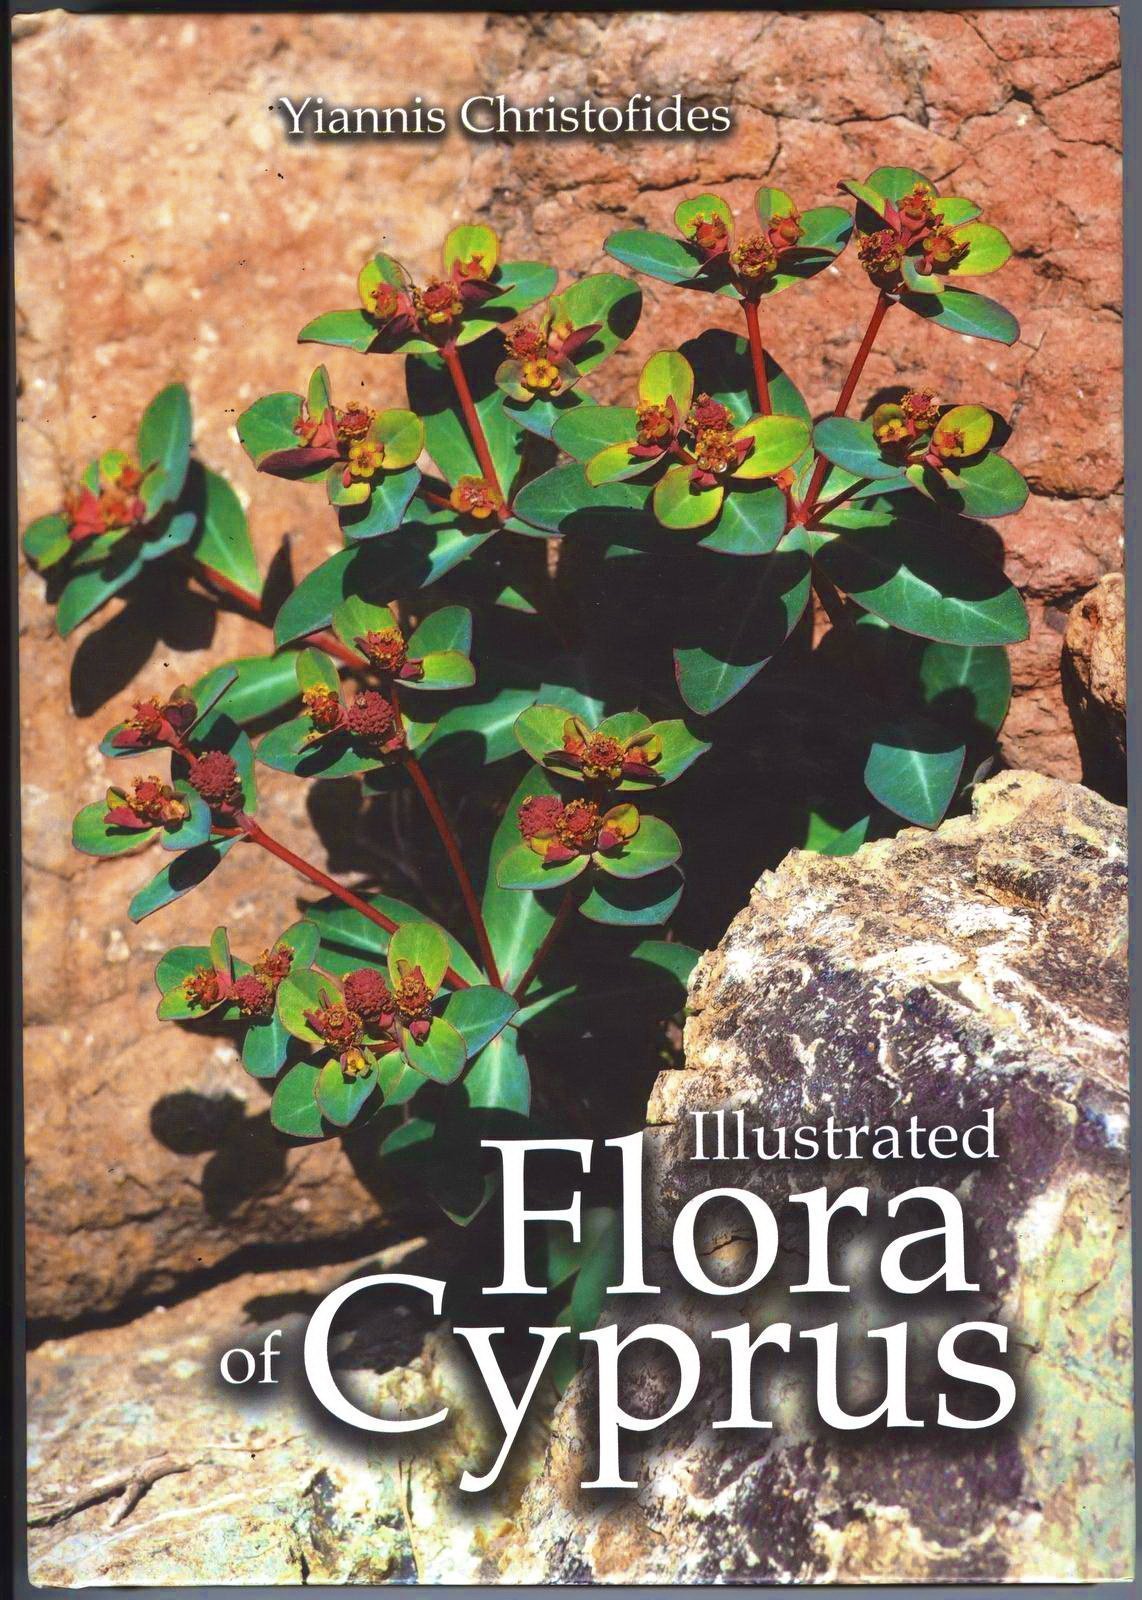 Book presentation: Illustrated Flora of Cyprus by Dr. Yiannis Christofides[:el]Παρουσίαση του βιβλίου:  Illustrated Flora of Cyprus του Δρ. Γιάννη Χριστοφίδη